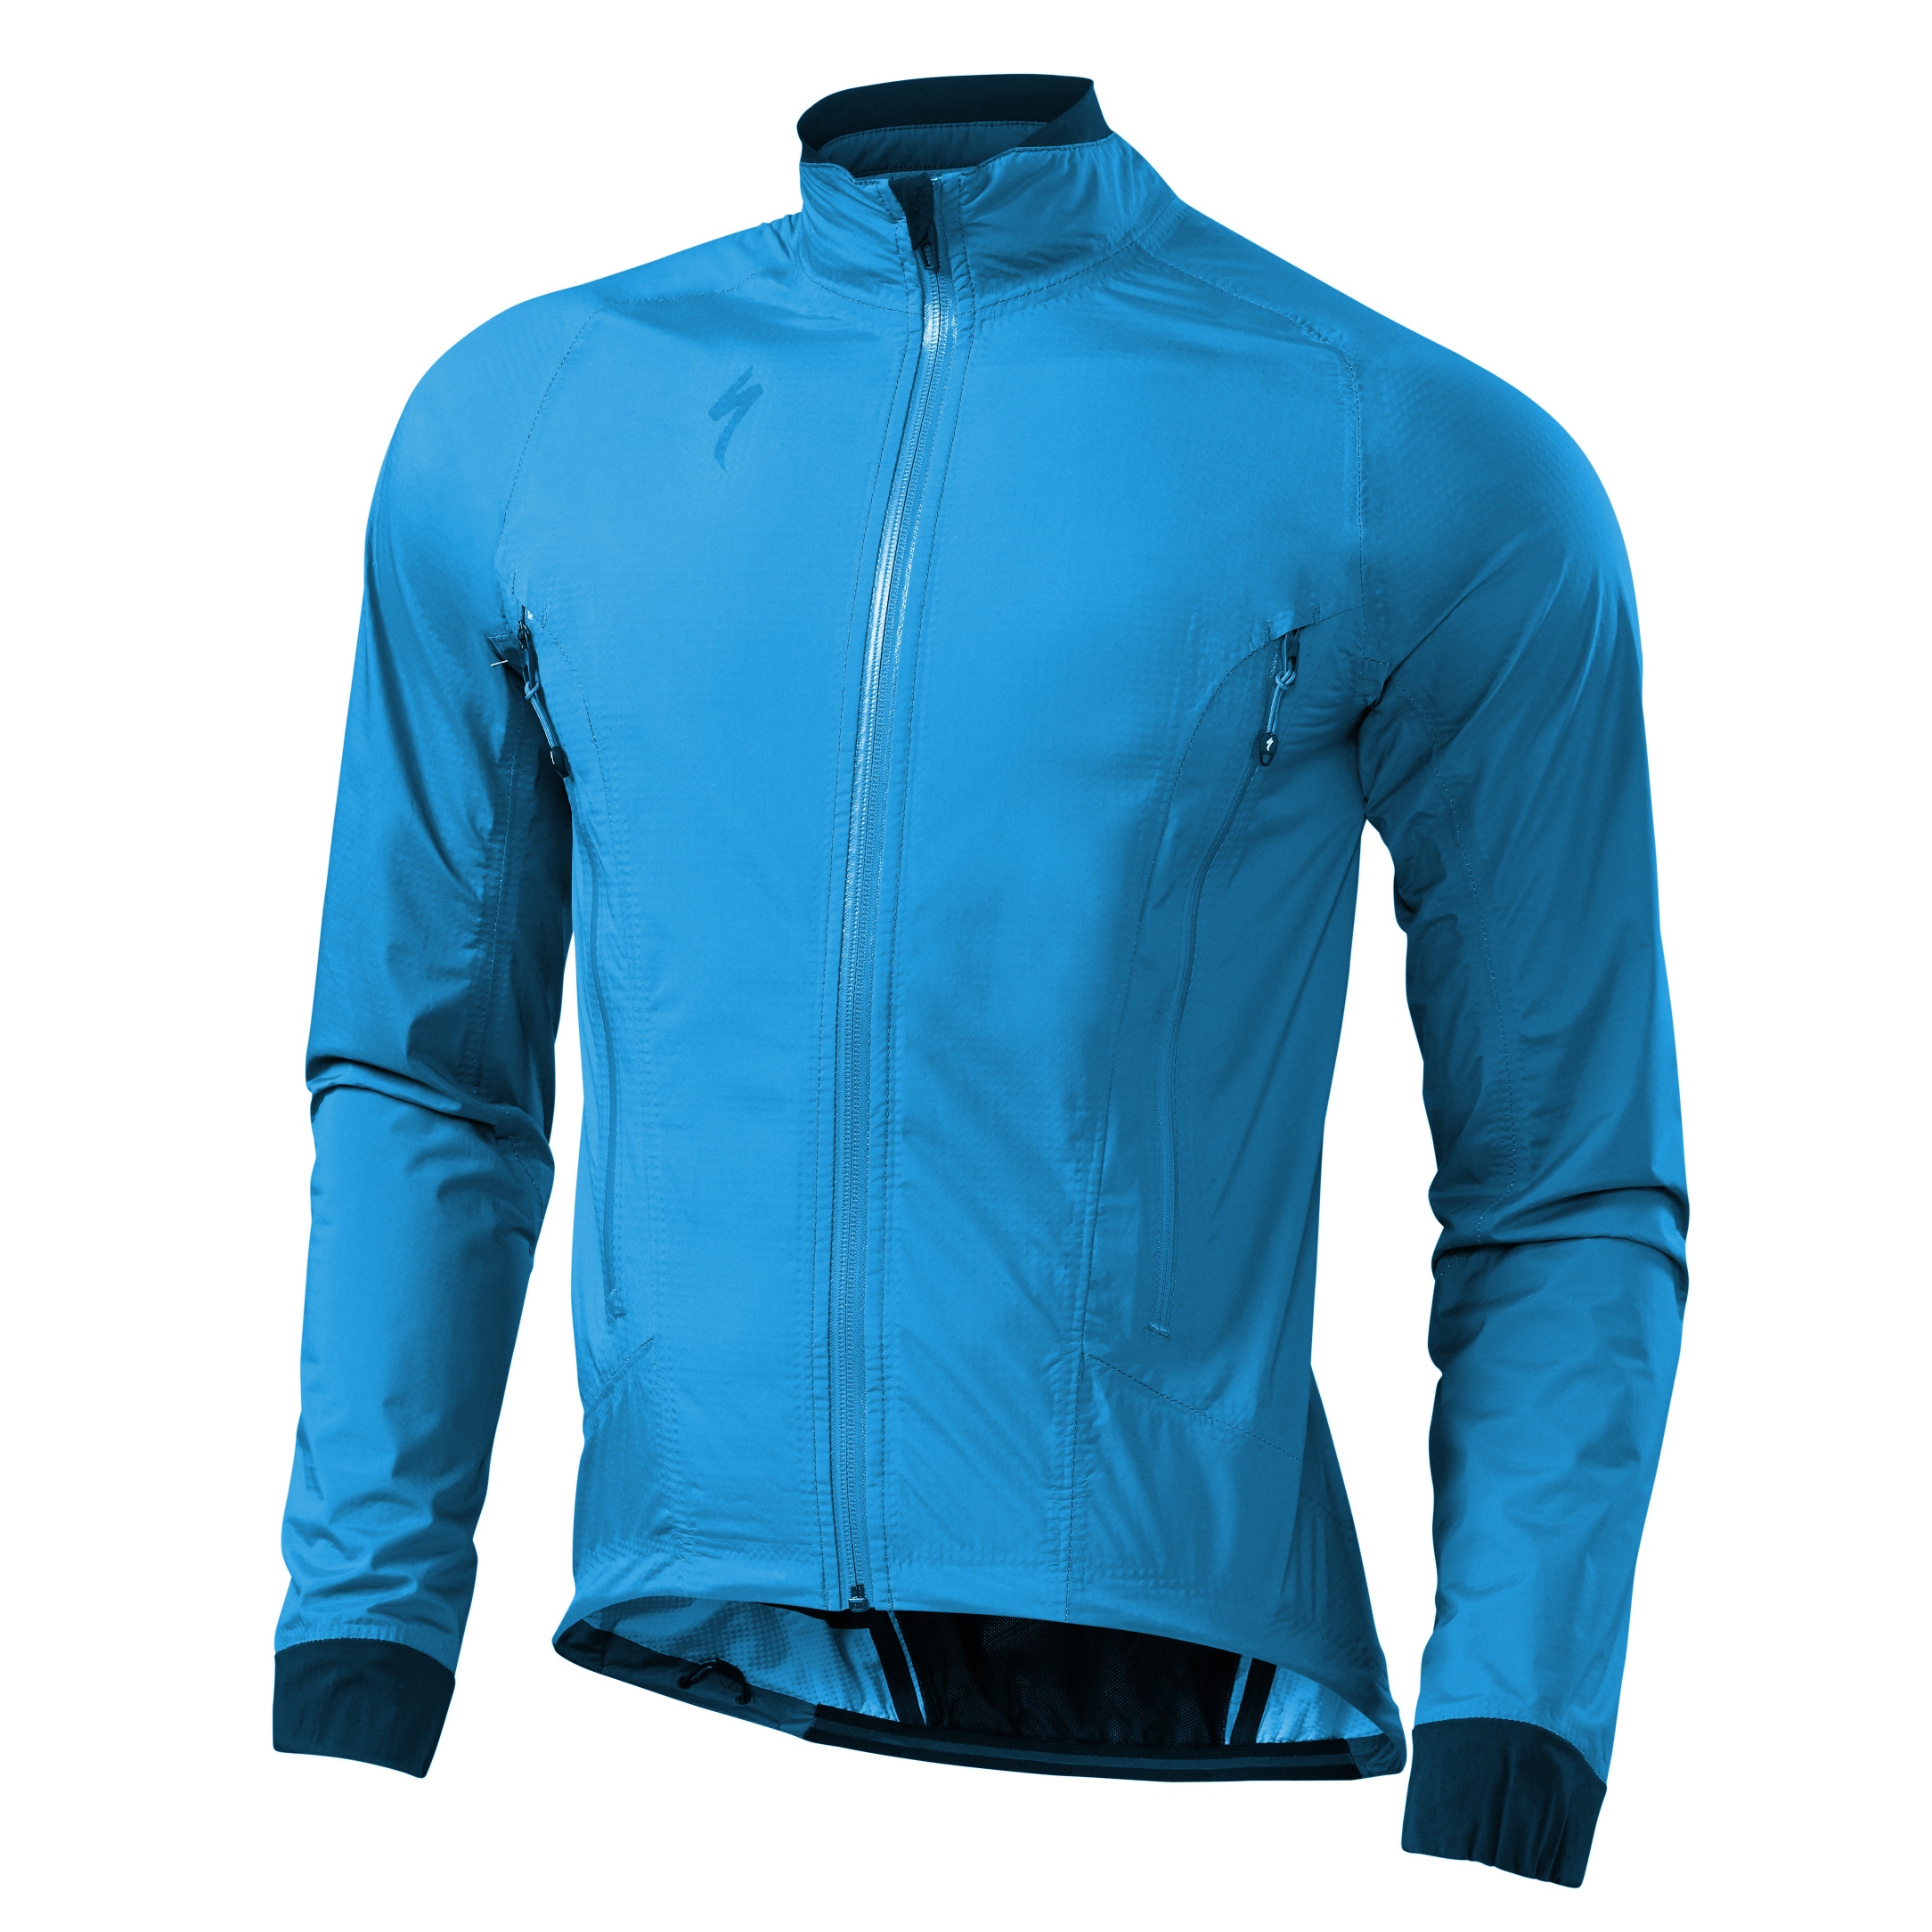 Specialized Men's Deflect H2O Road Cycling Jacket Marine Blue - Medium